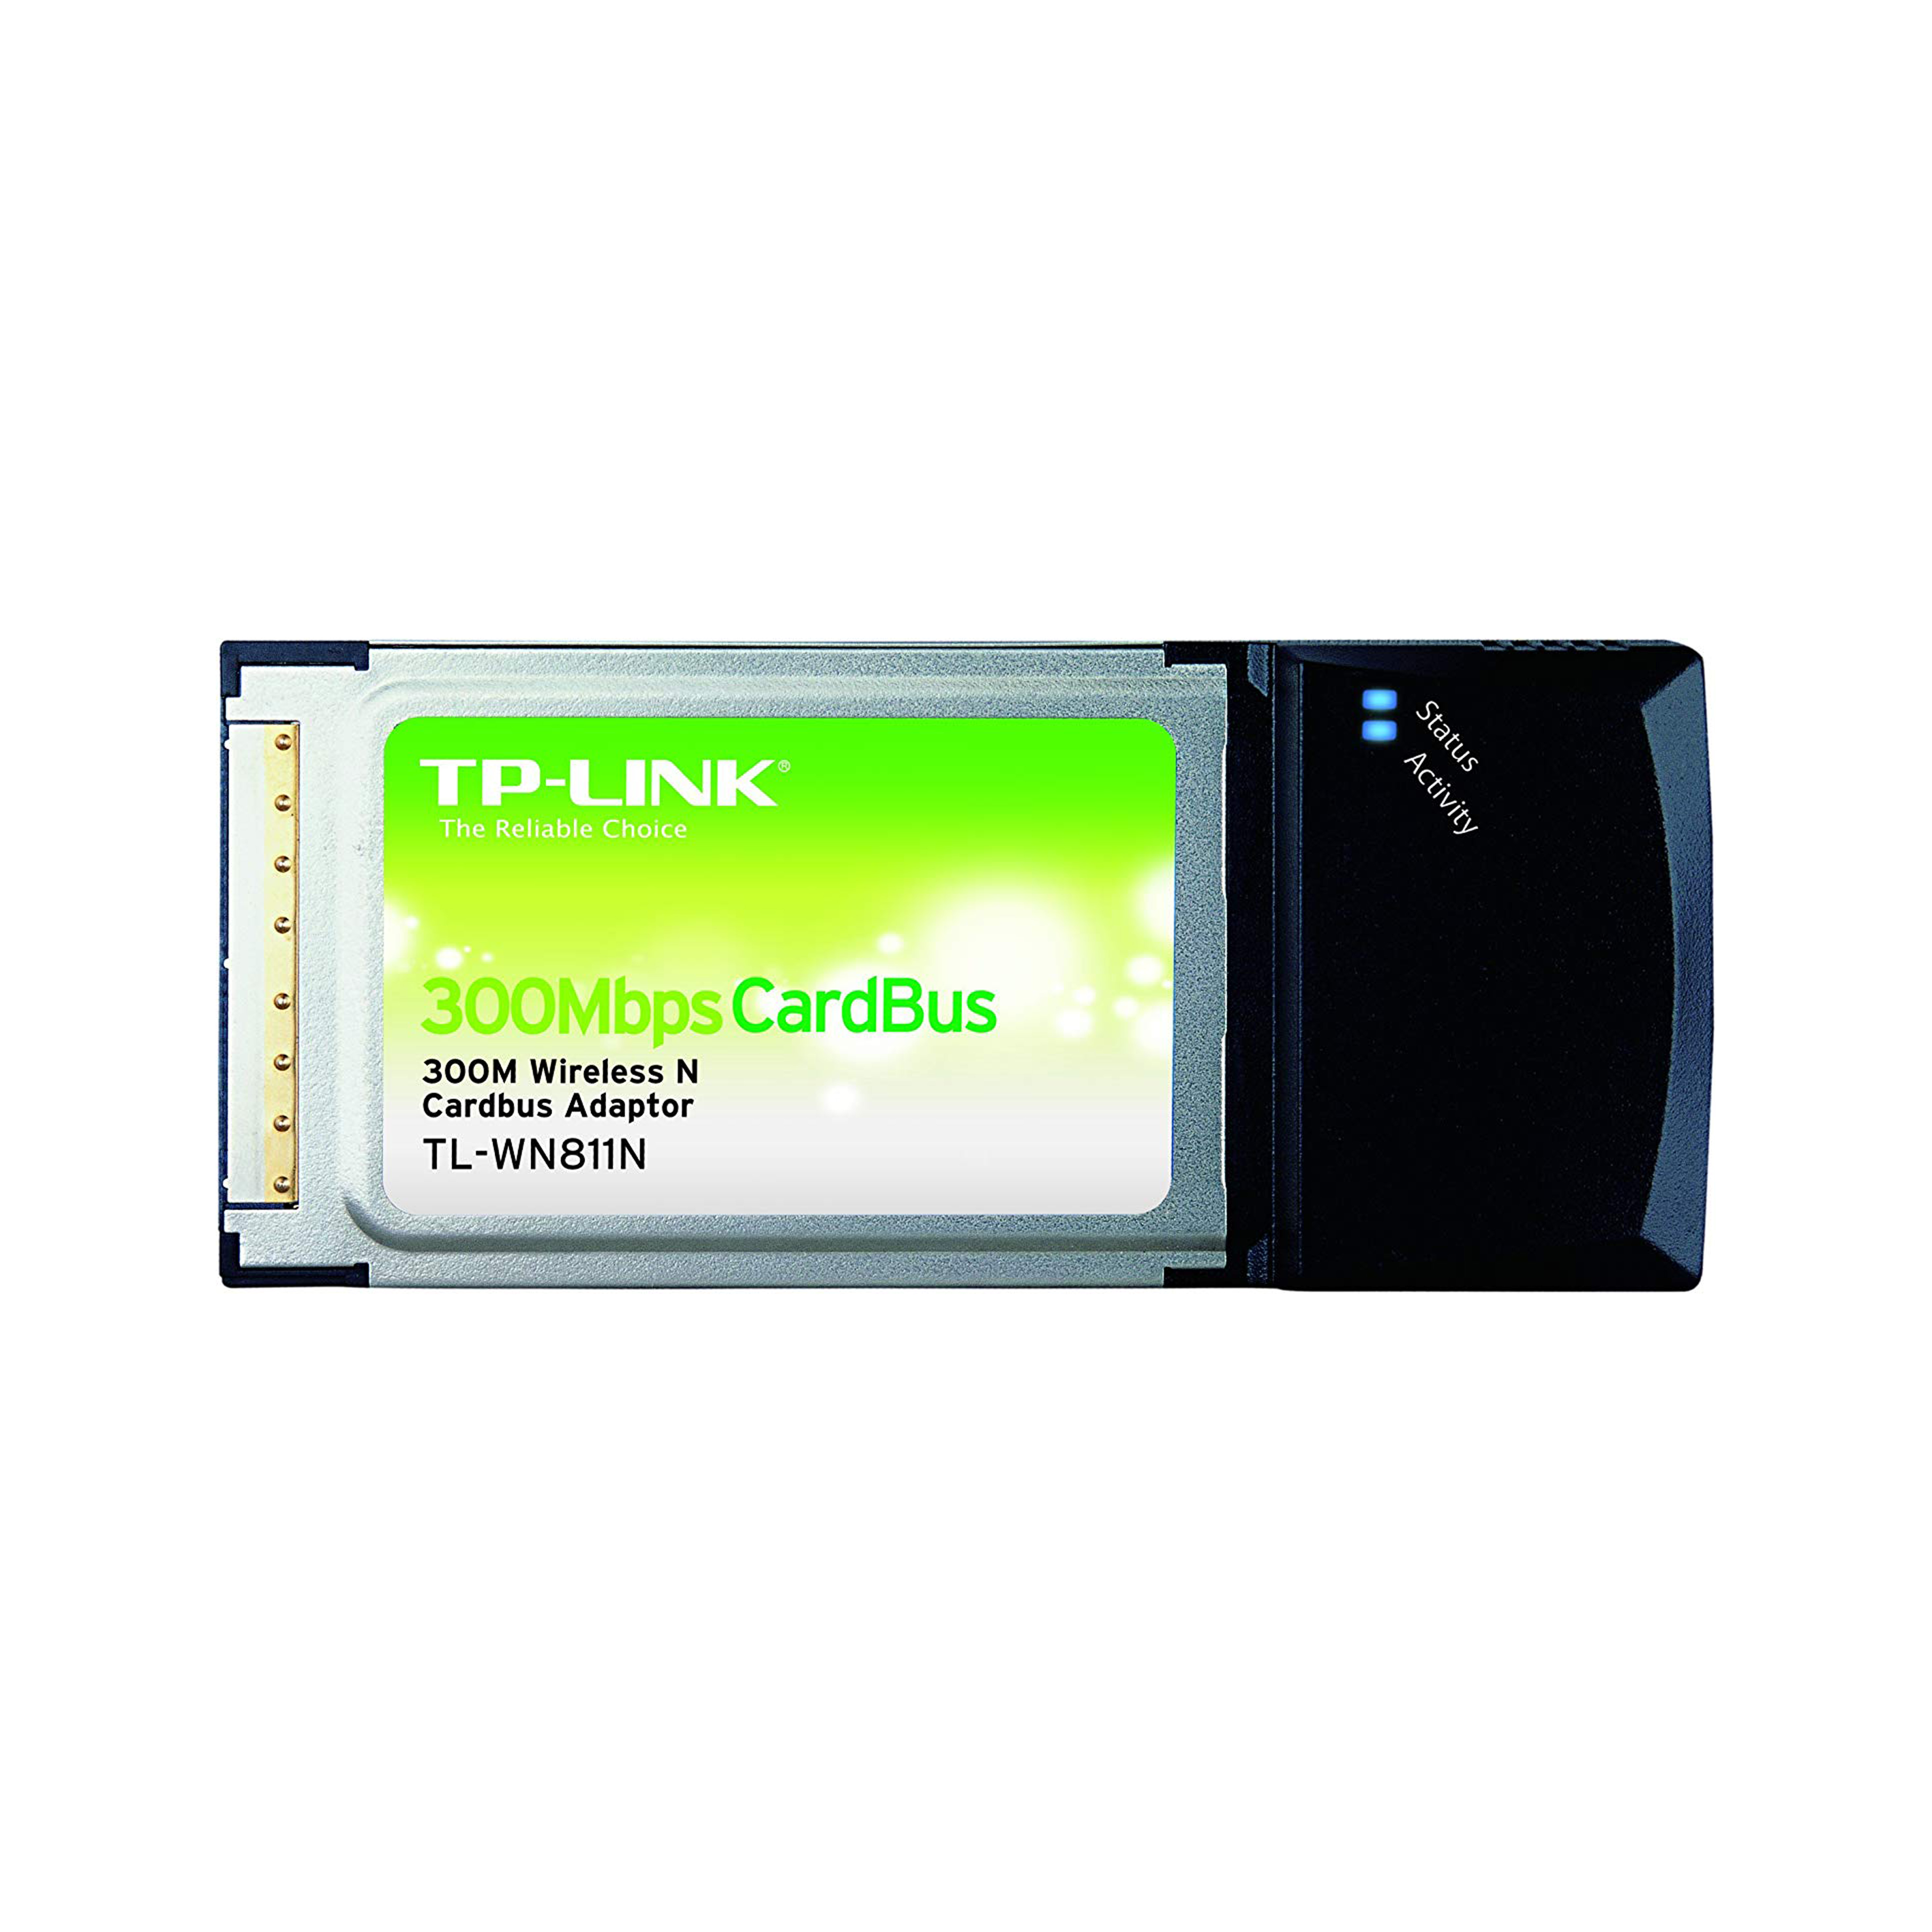 TP-LINK TL-WN811N Wireless N Cardbus Adapter